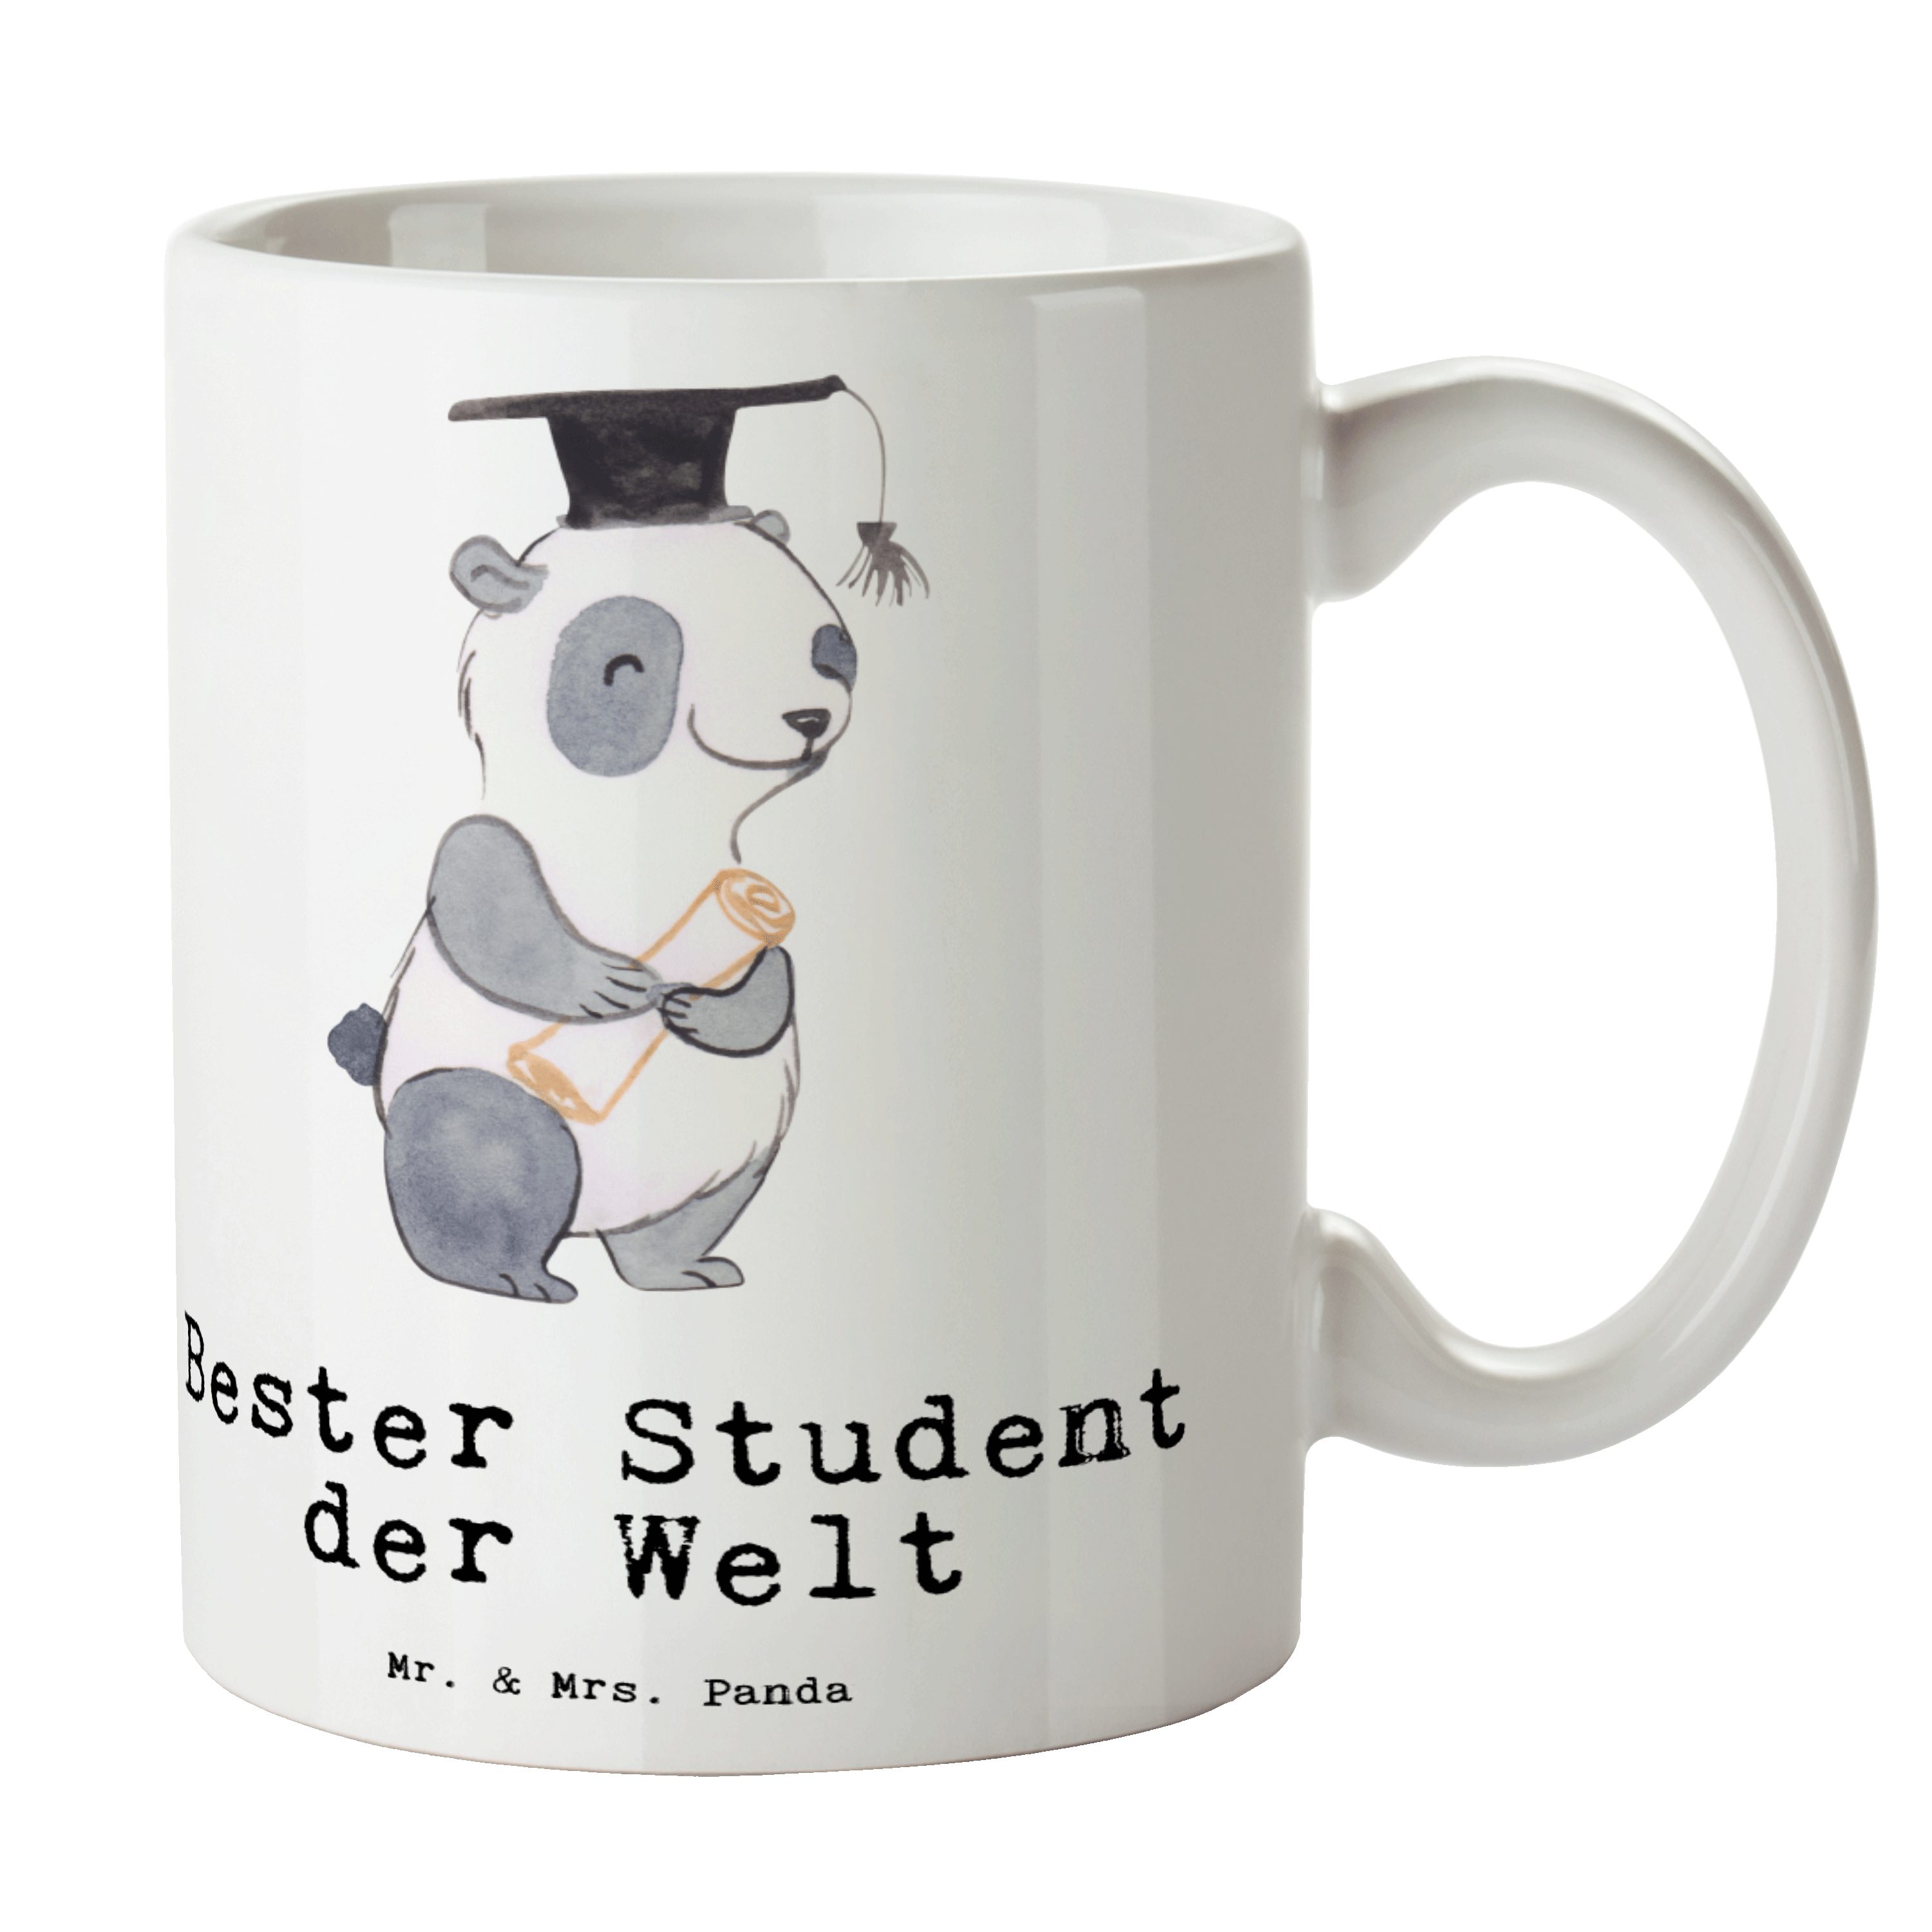 Mr. & Mrs. Panda Tasse Freude Bester Studium, der Dankeschön, Abschluss, Büro, Geburtstag, Panda - Kaffeebecher, machen, Weiß Welt Tee, Becher, Student Geschenk, Keramik Schenken, 